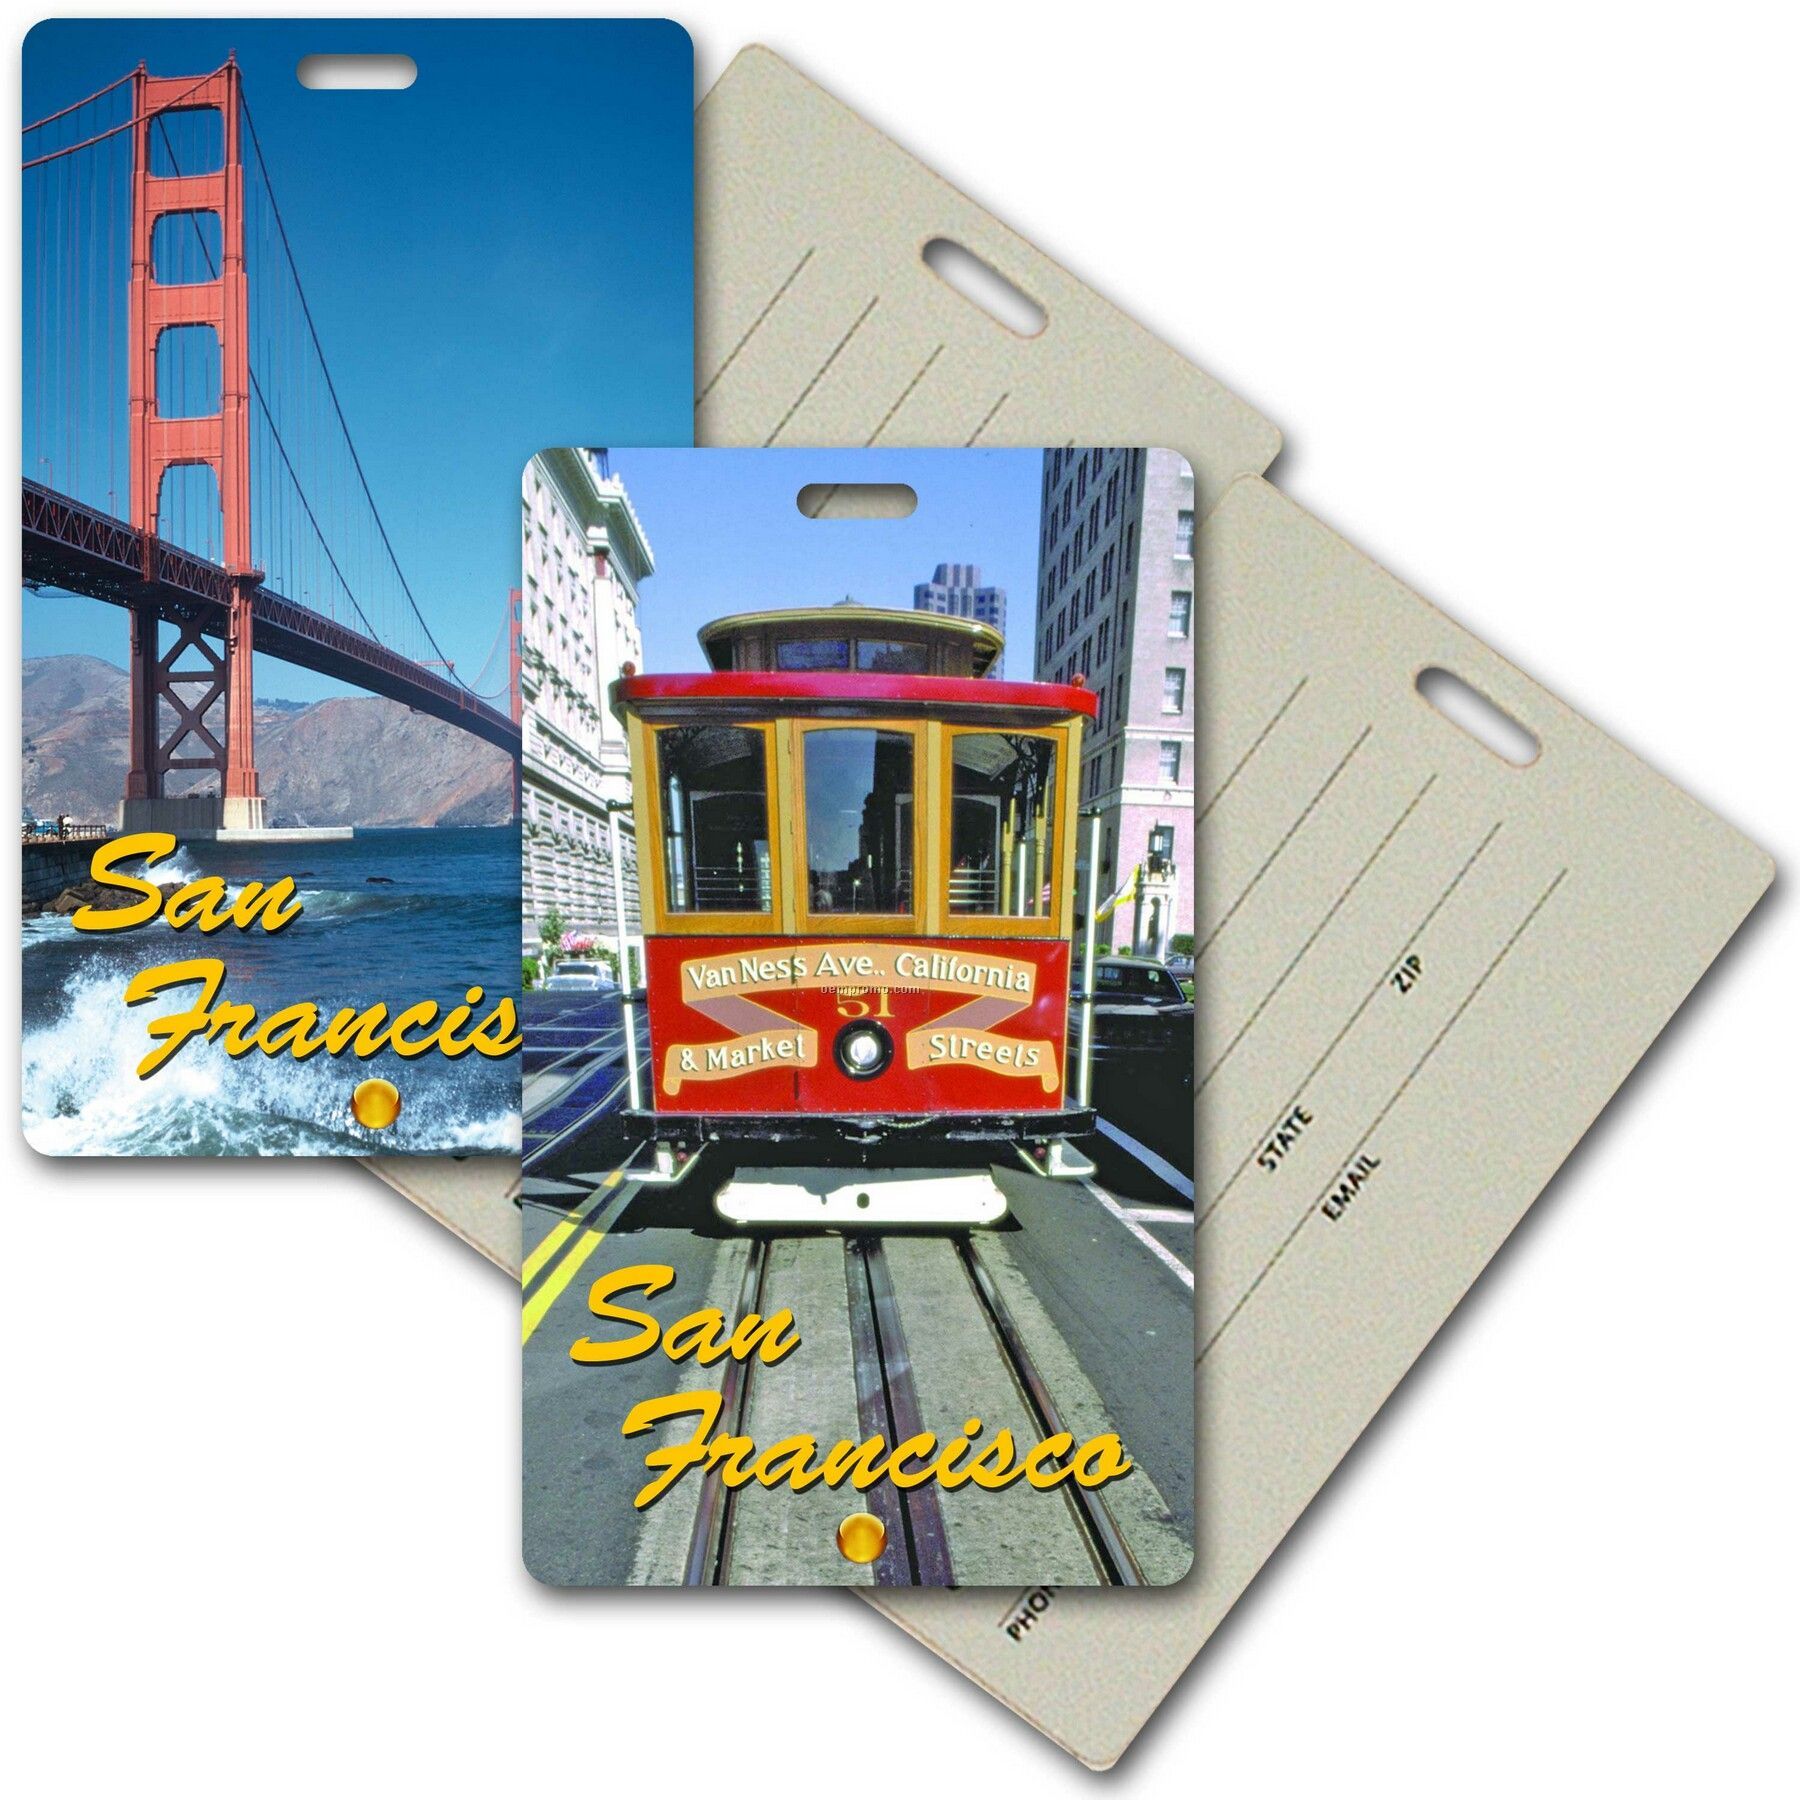 Privacy Tag W/3d Lenticular Images Of San Francisco Landmarks (Custom)